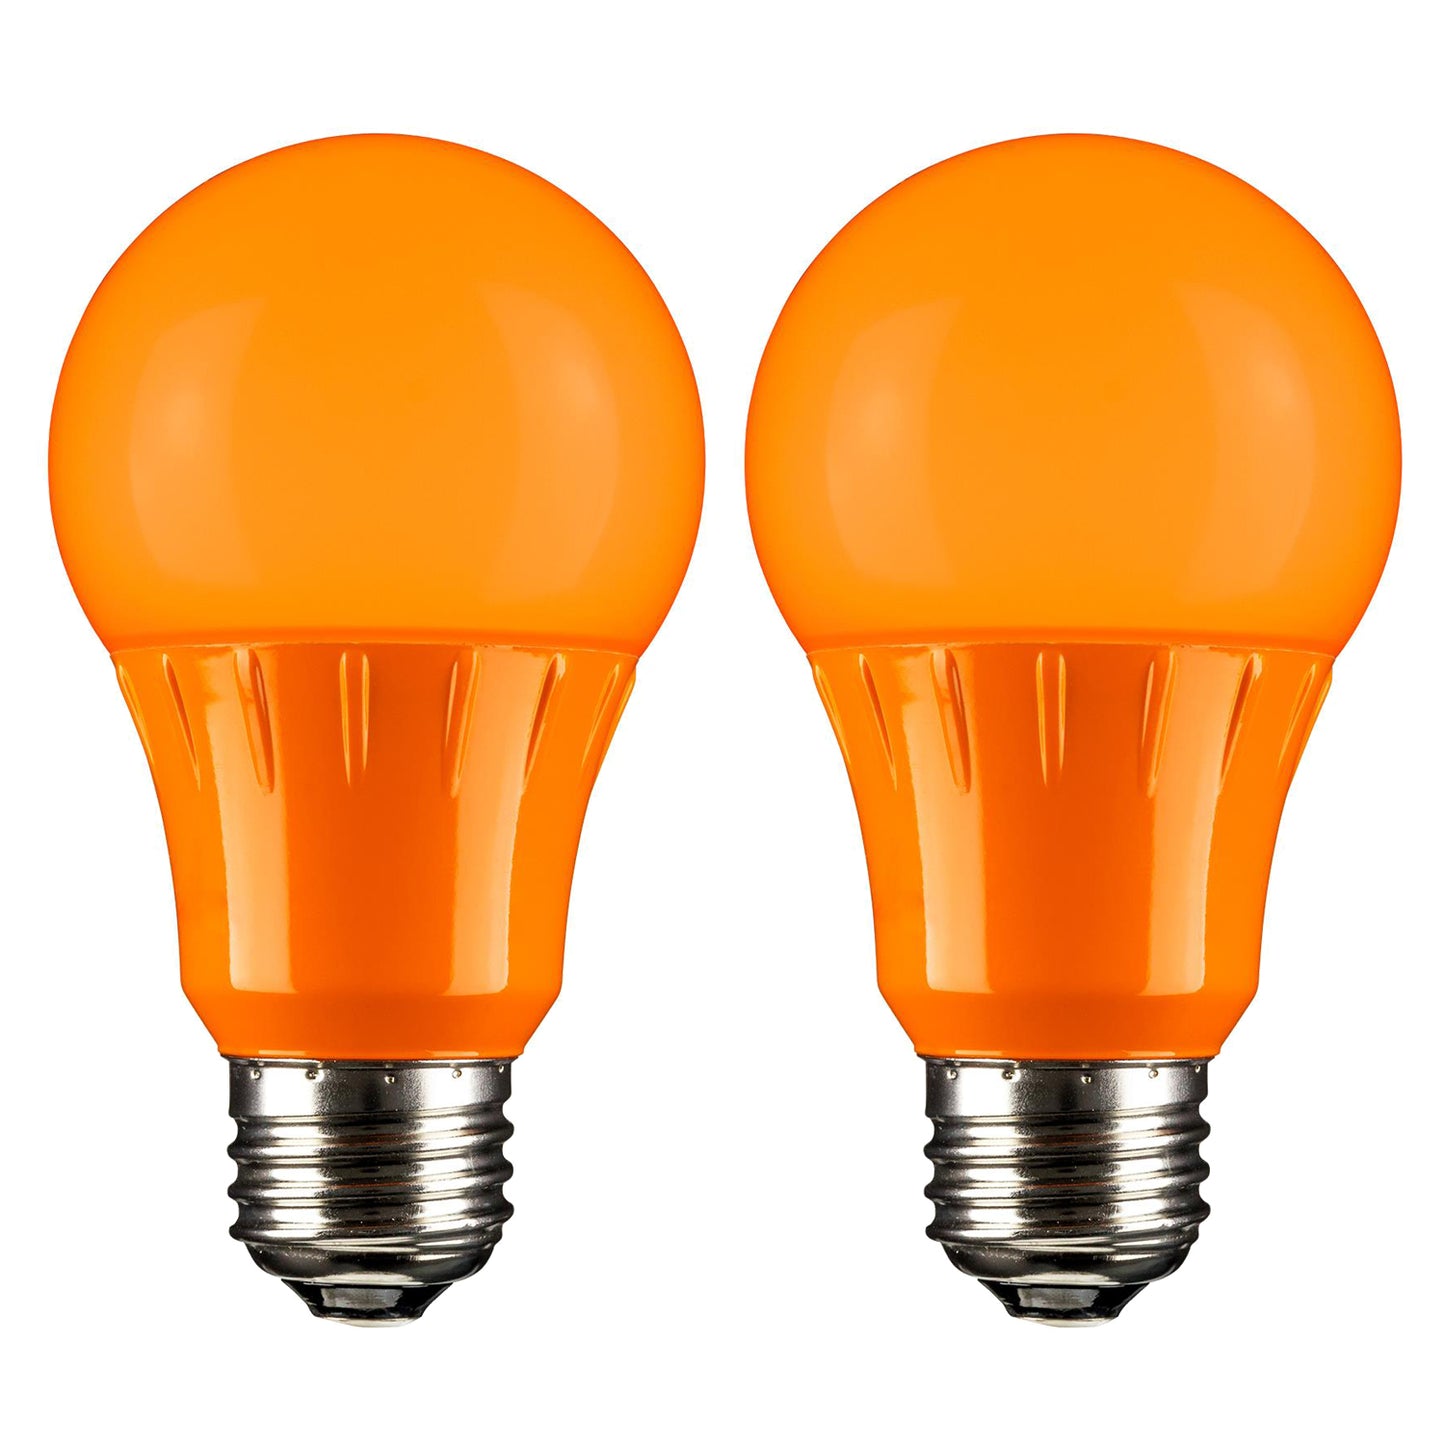 Sunlite LED A Type Colored 3W Light Bulb Medium (E26) Base, Orange